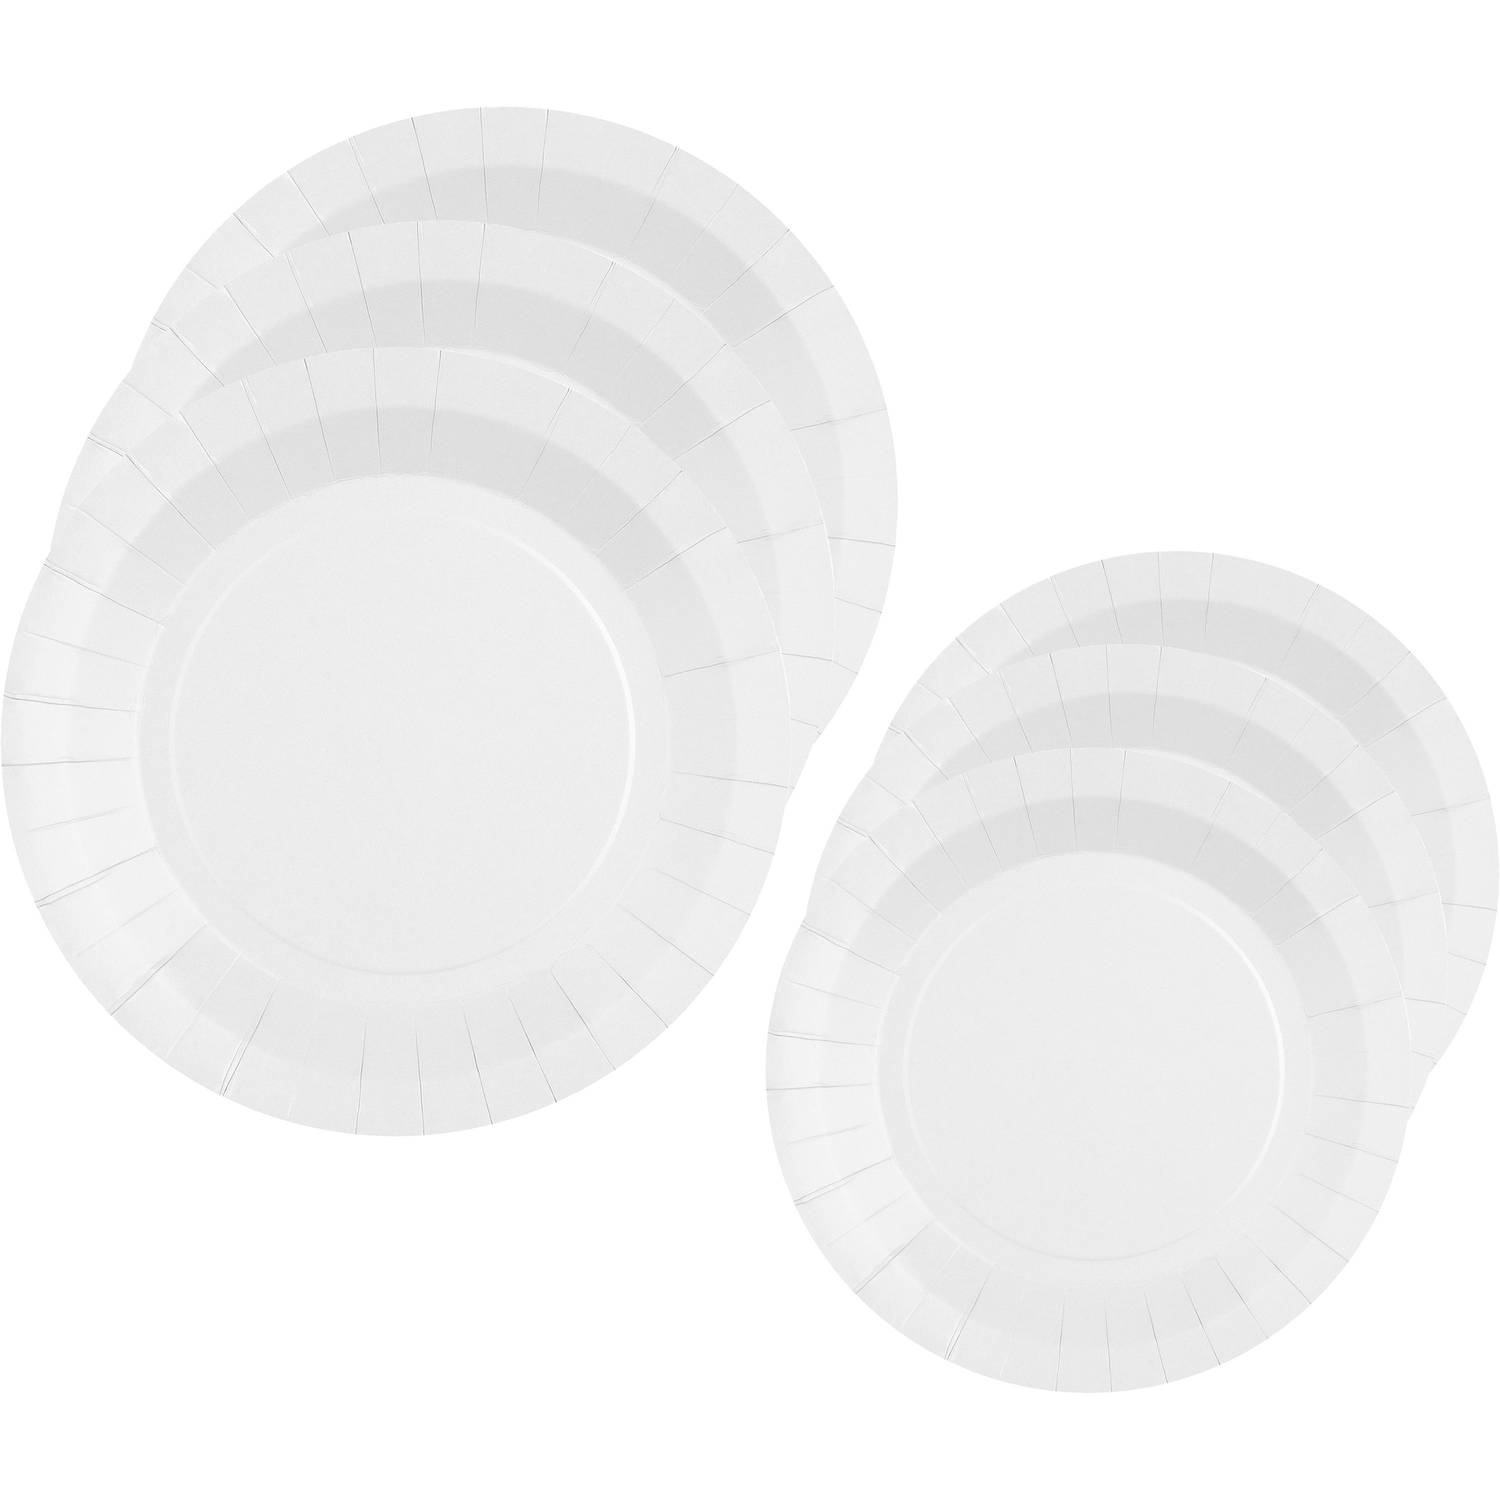 Santex Feest borden set - 40x stuks - wit - 17 cm en 22 cm - Feestbordjes